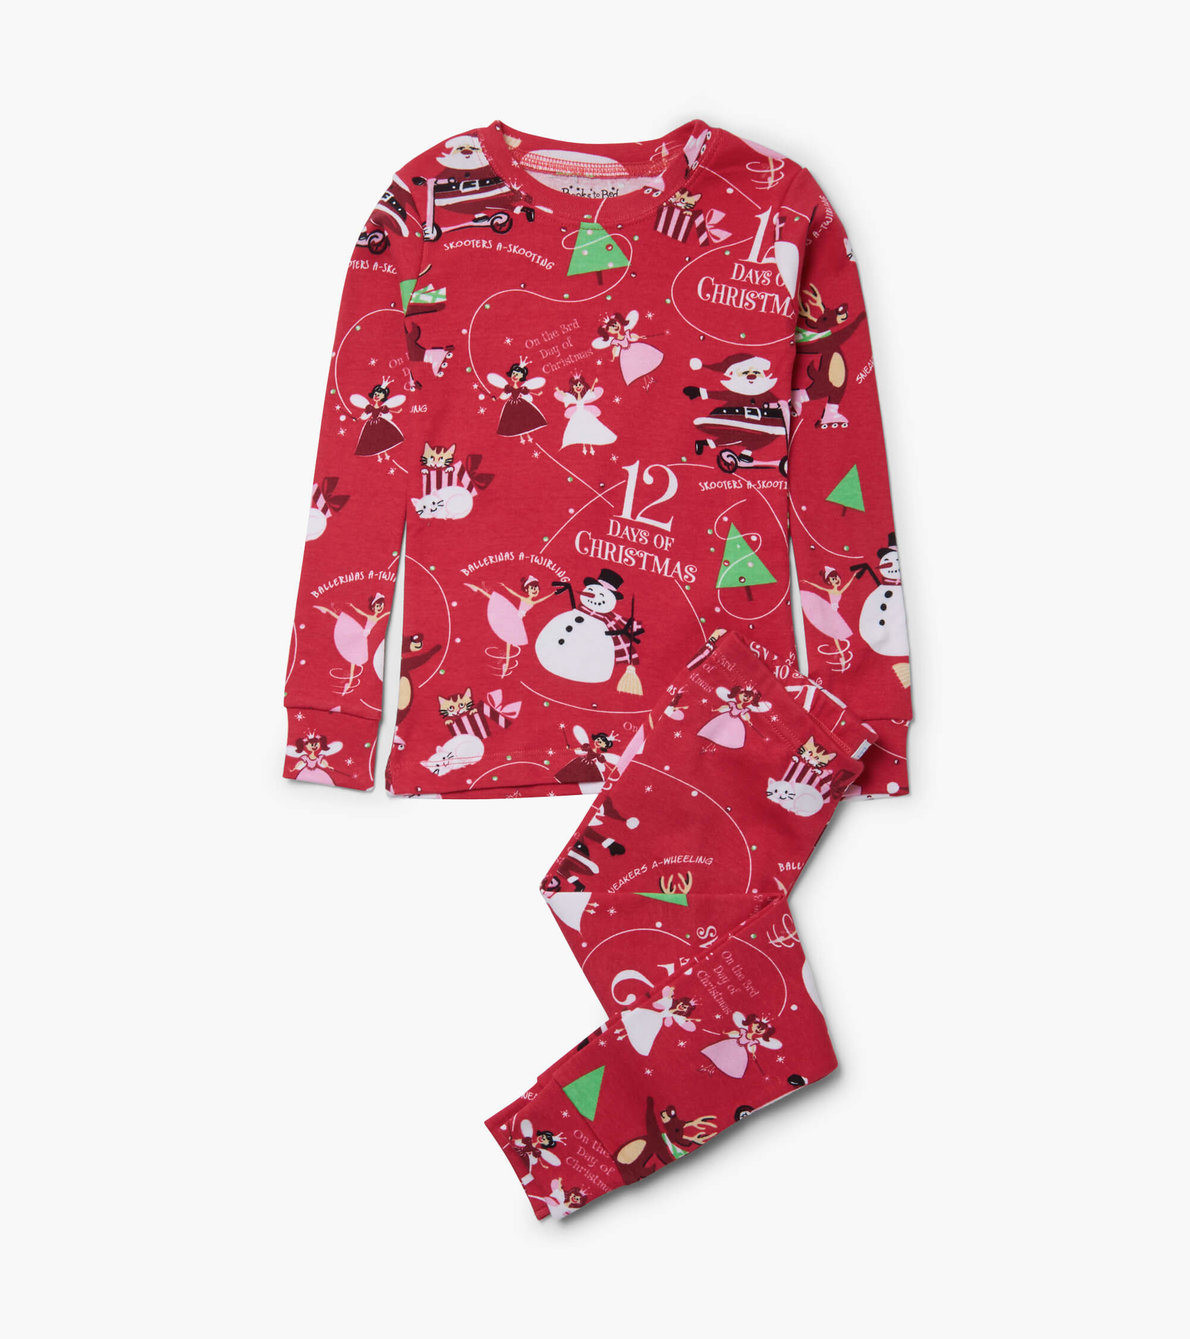 Agrandir l'image de Pyjama rouge – « 12 Days of Christmas »